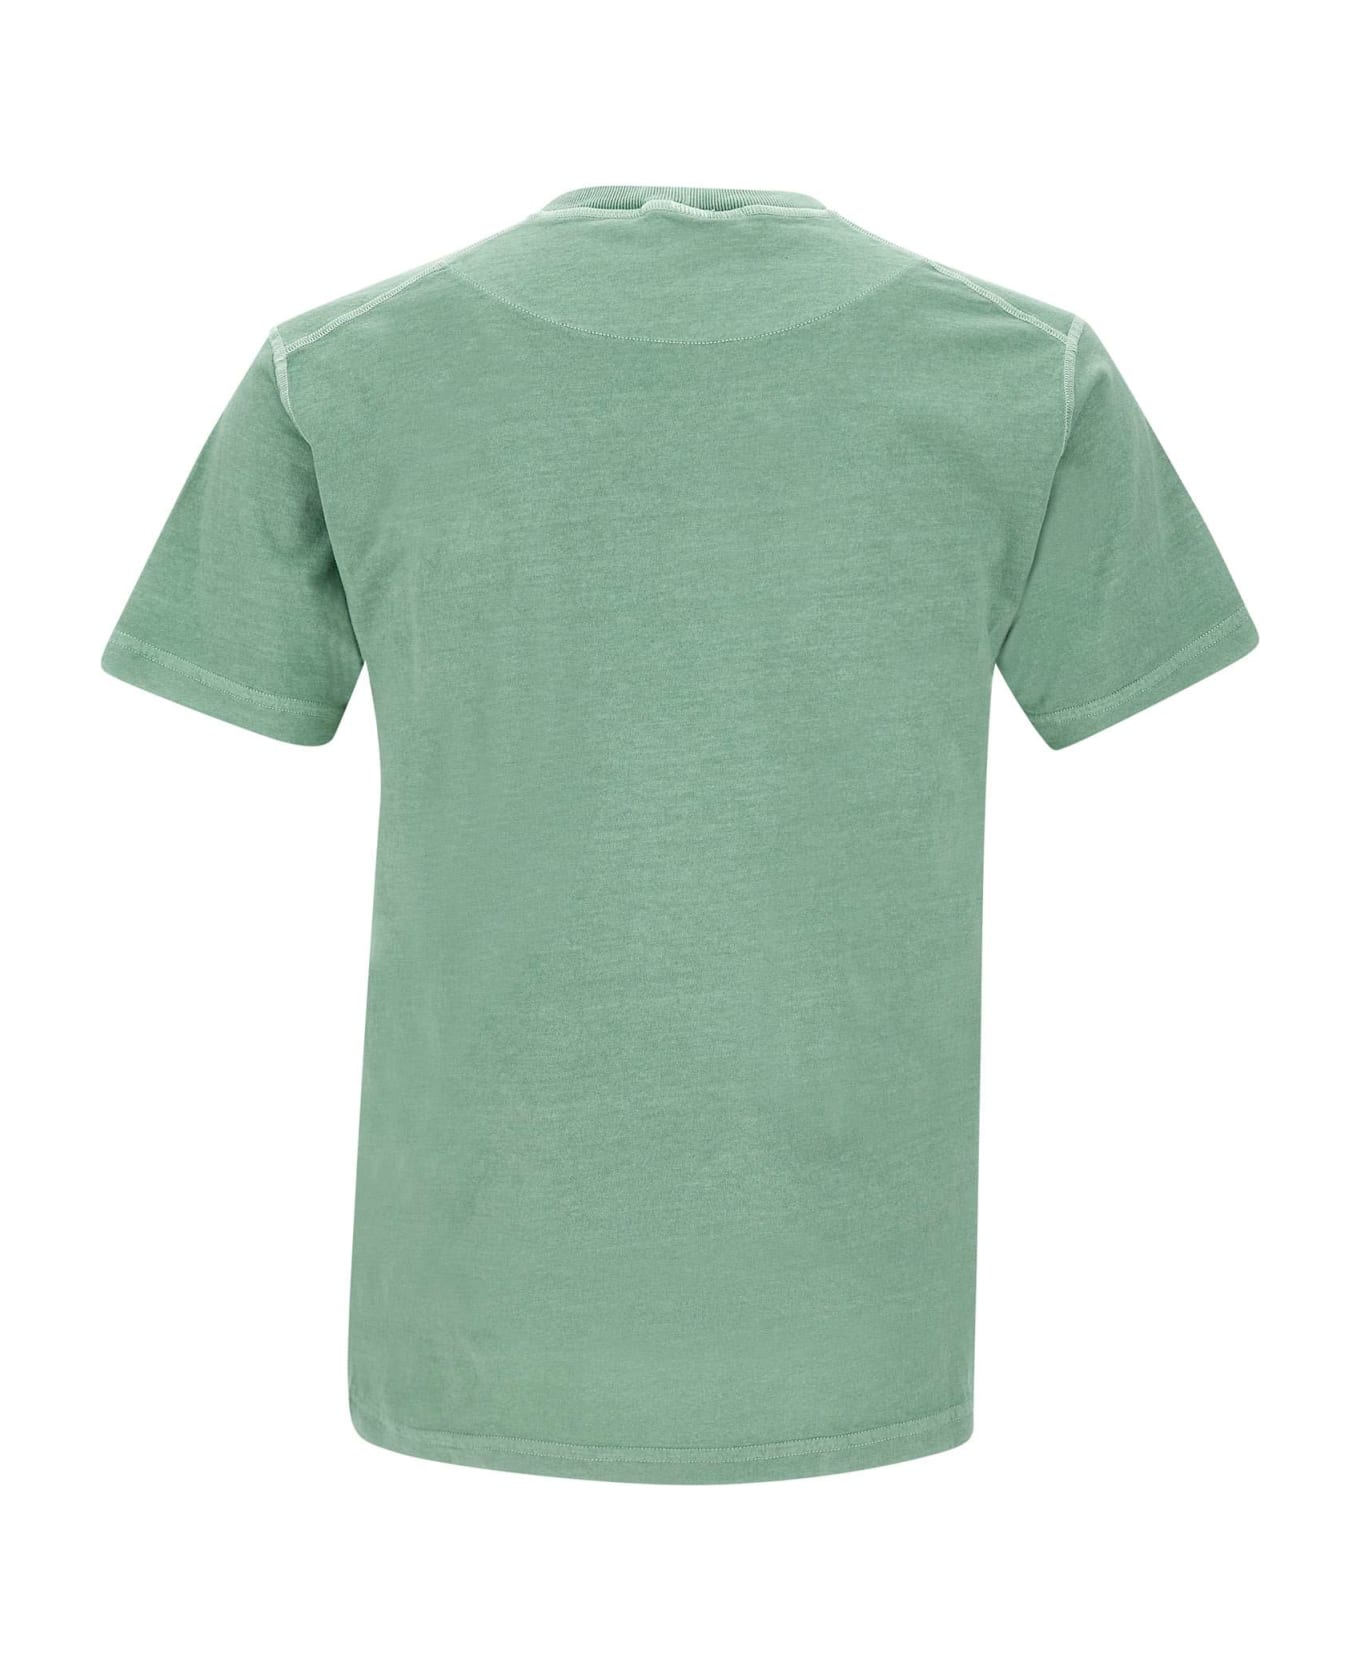 Stone Island Organic Cotton T-shirt - GREEN シャツ